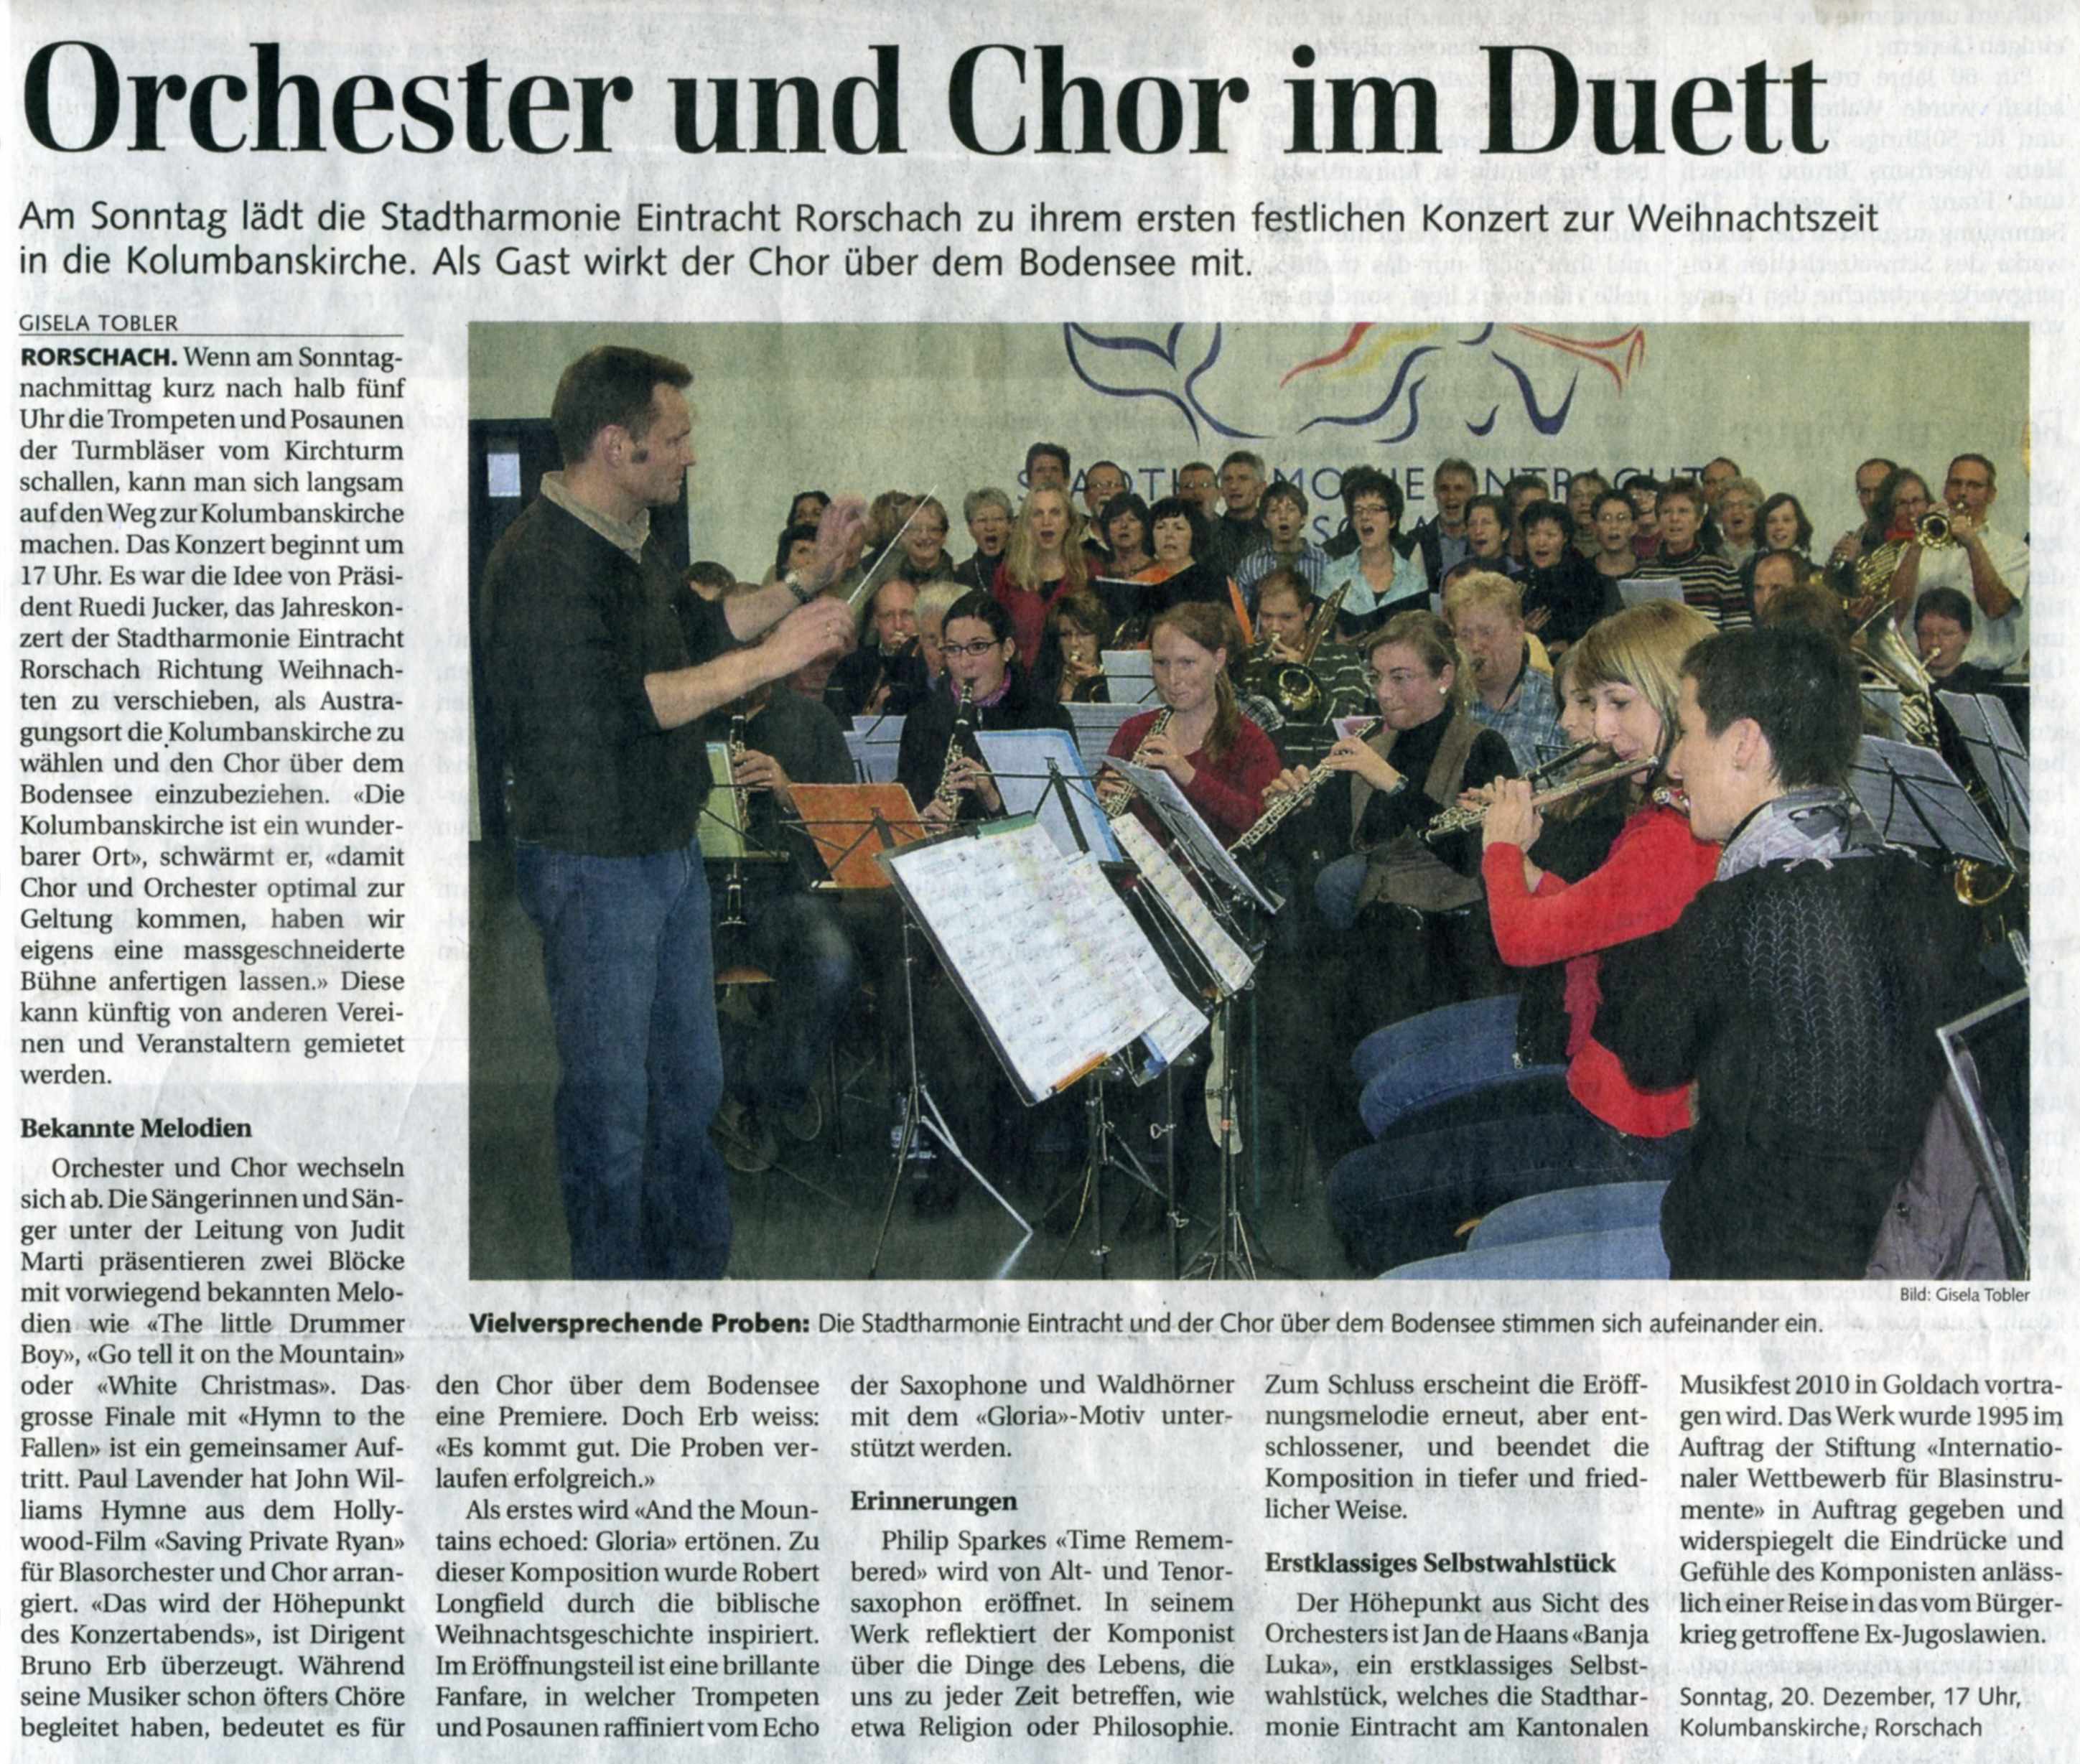 Bericht von Gisela Tobler im Tagblatt vom 19. Dezember 2009